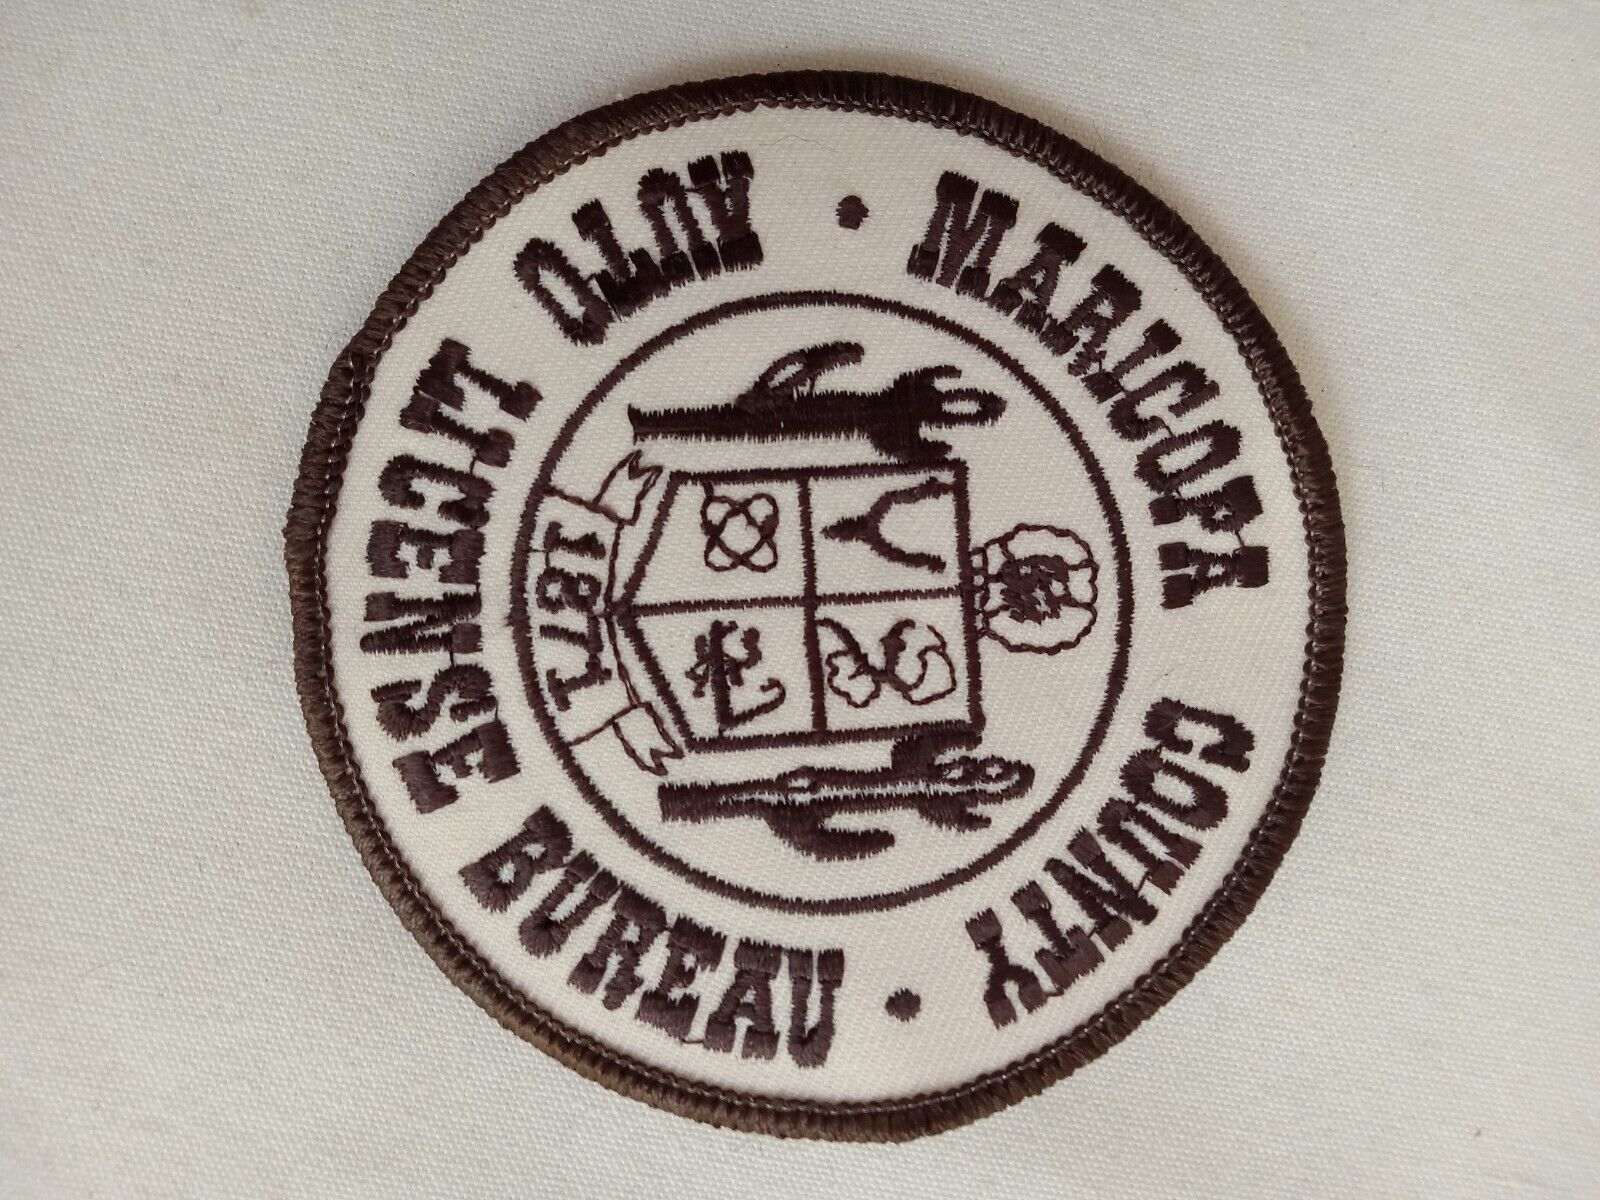 Vintage MARICOPA COUNTY Az., Auto License Bureau Patch. Obsolete/ Collectible.